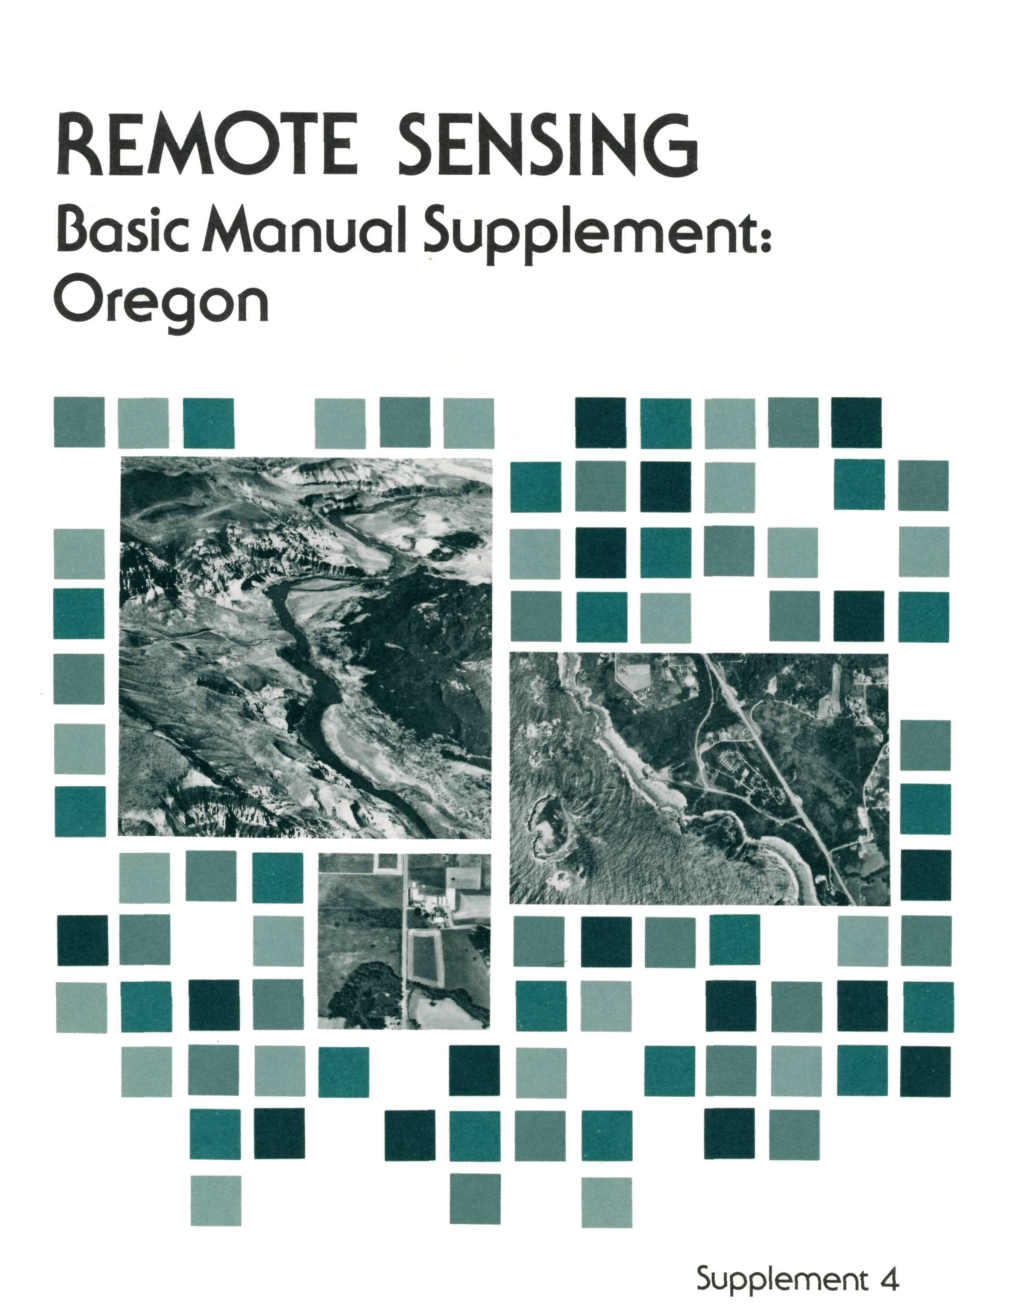 REMOTE SENSING Dosic Manual Supplement: Oregon